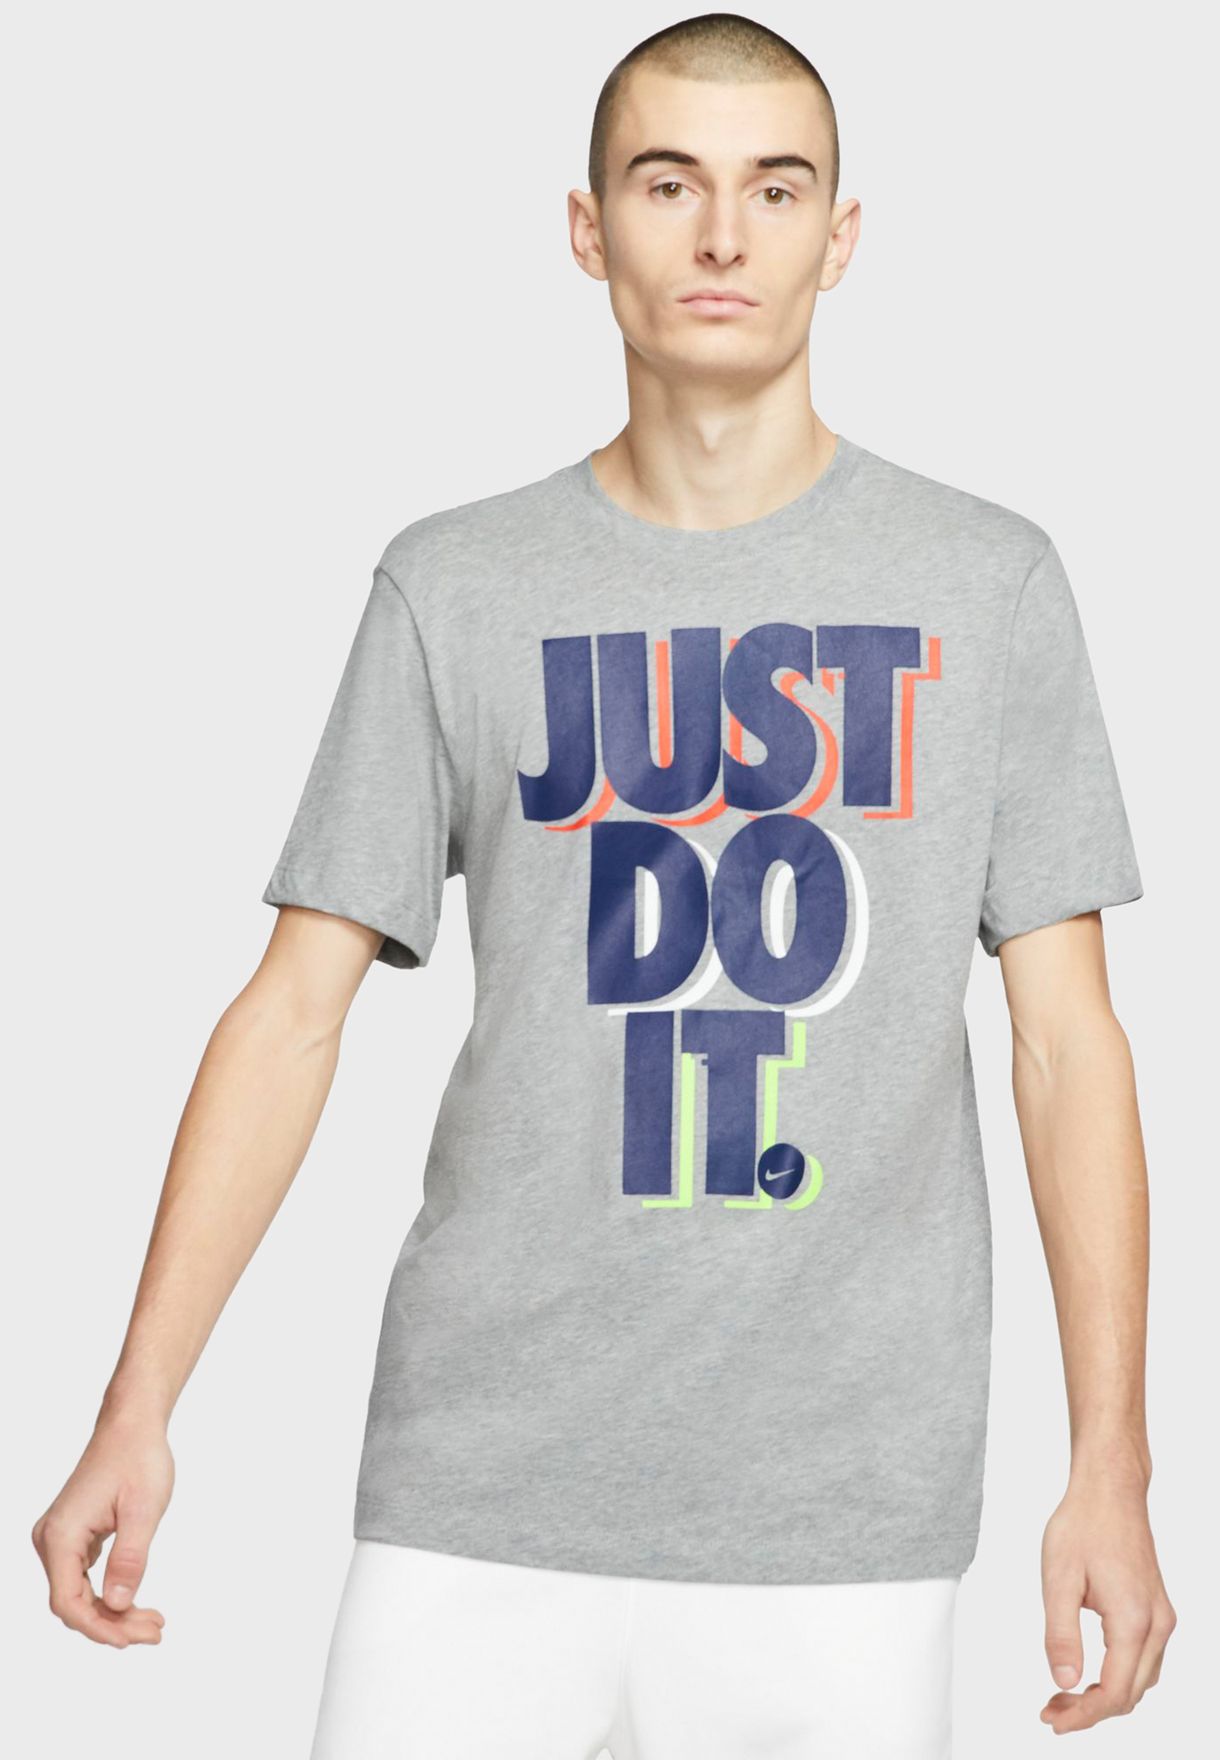 Nike Just Do It Shirts Gray